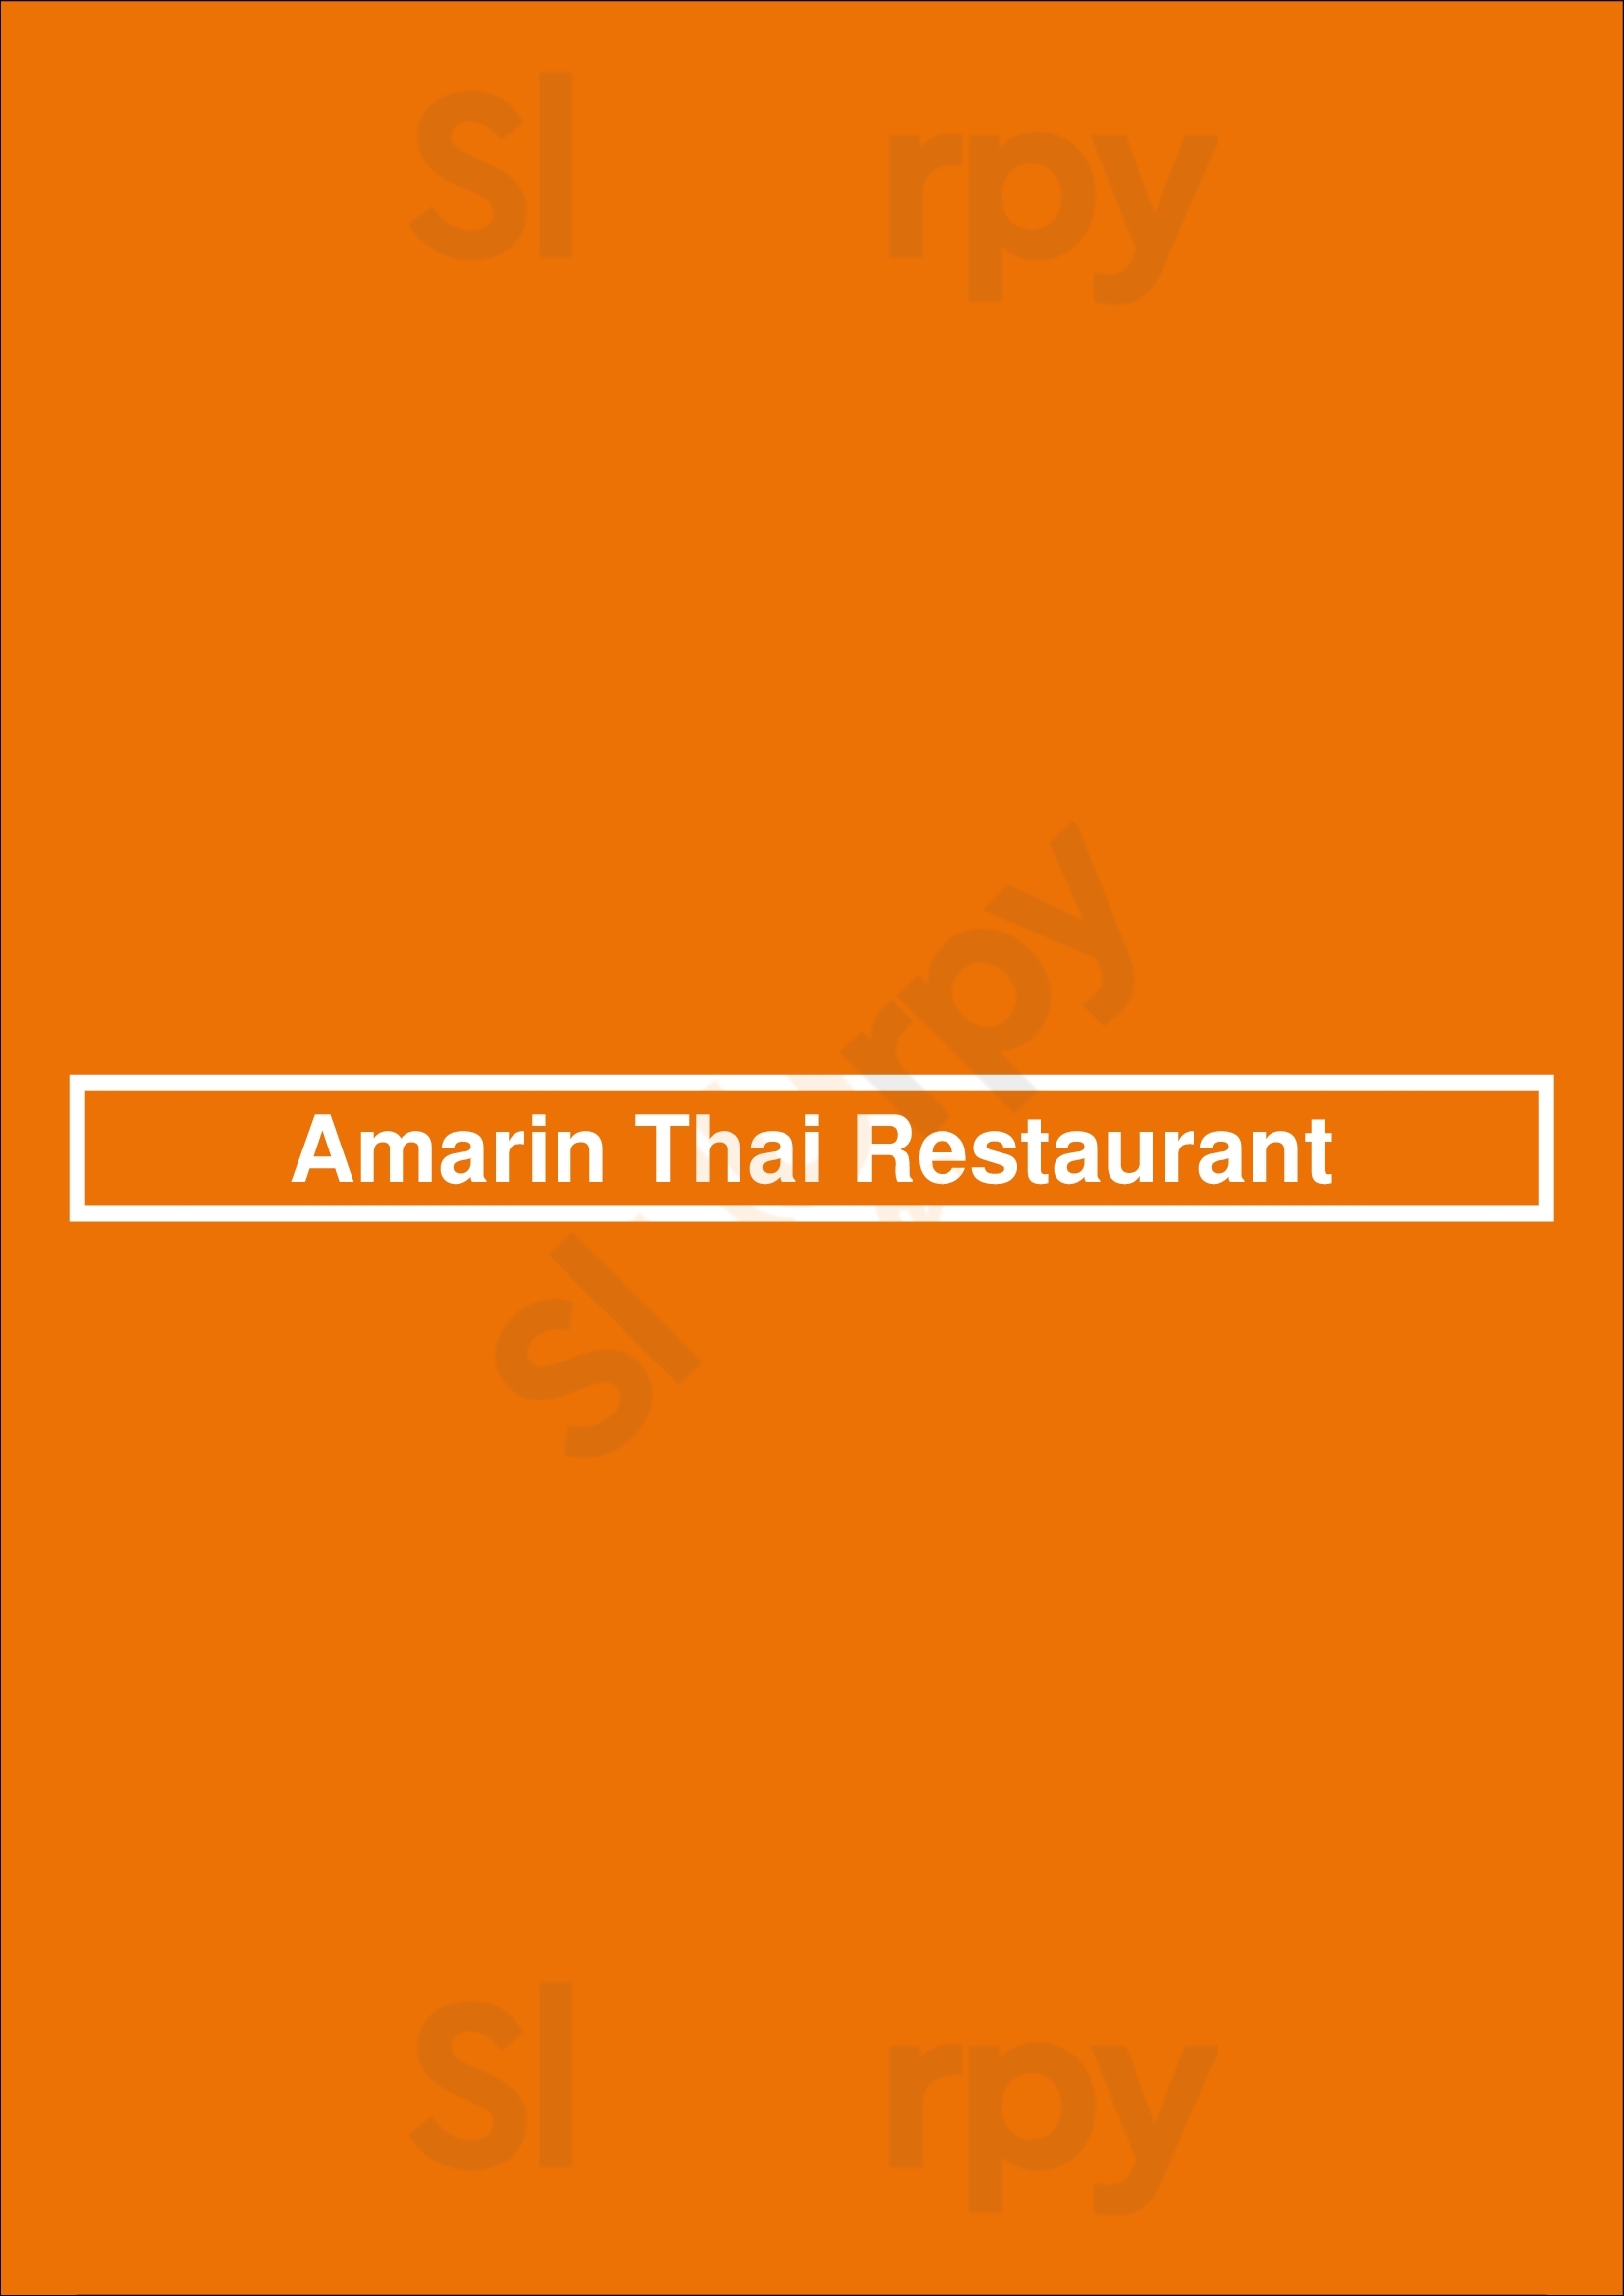 Amarin Thai Restaurant San Diego Menu - 1